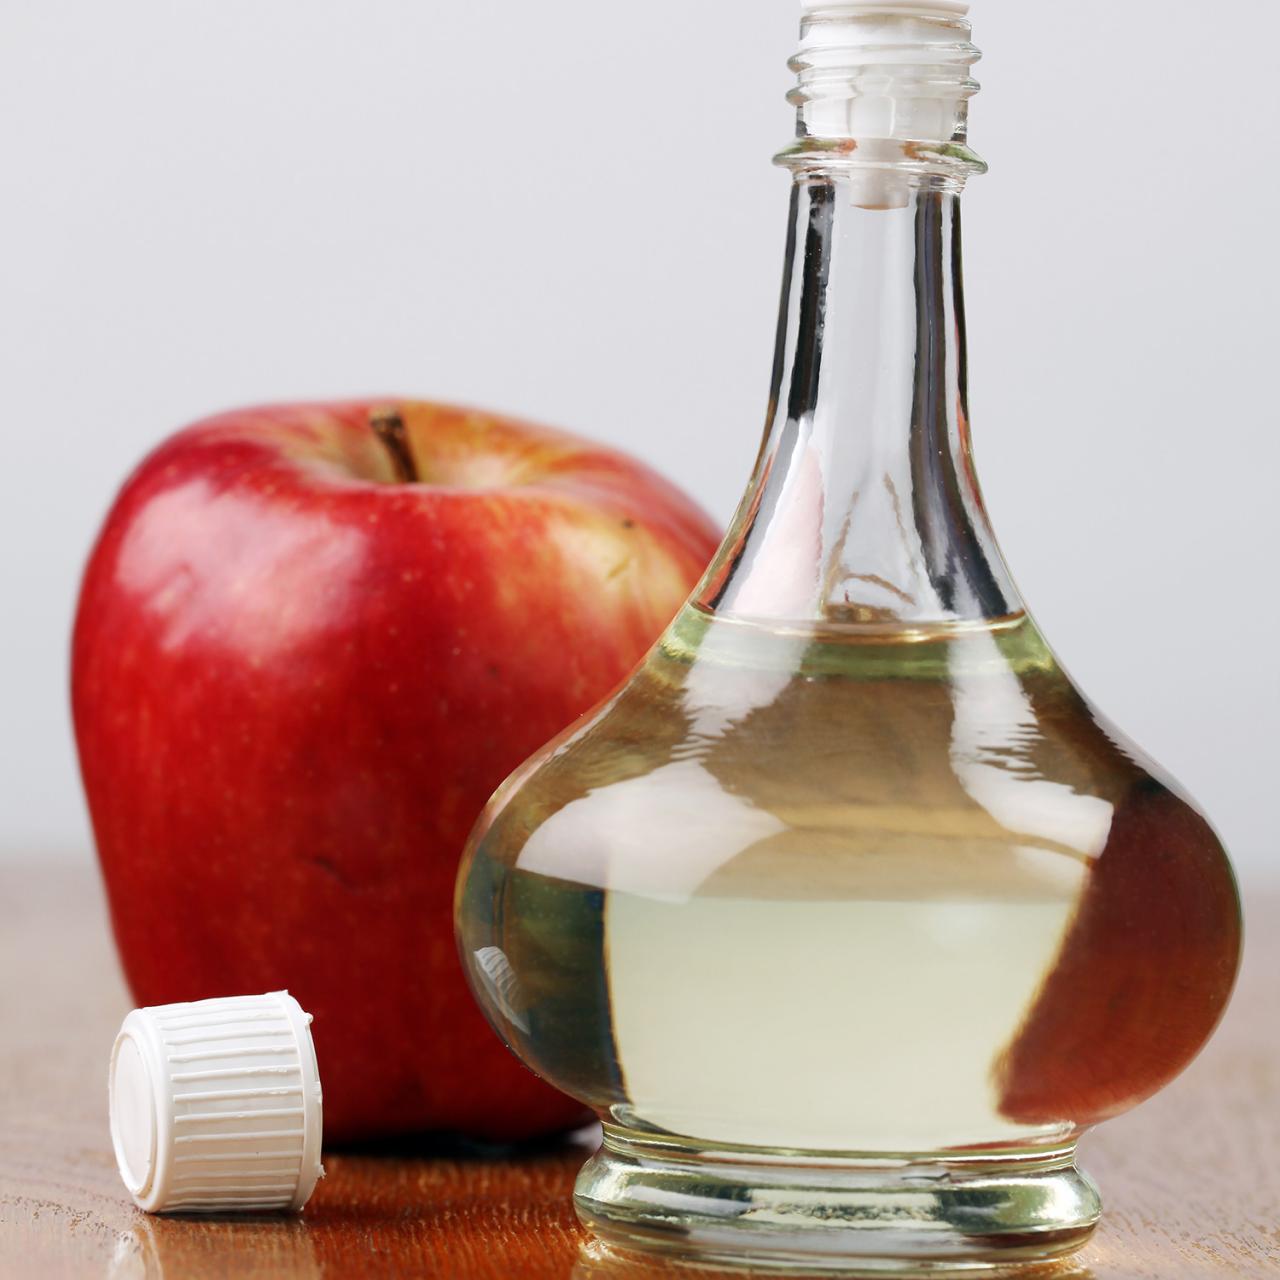 November 1: National Vinegar Day